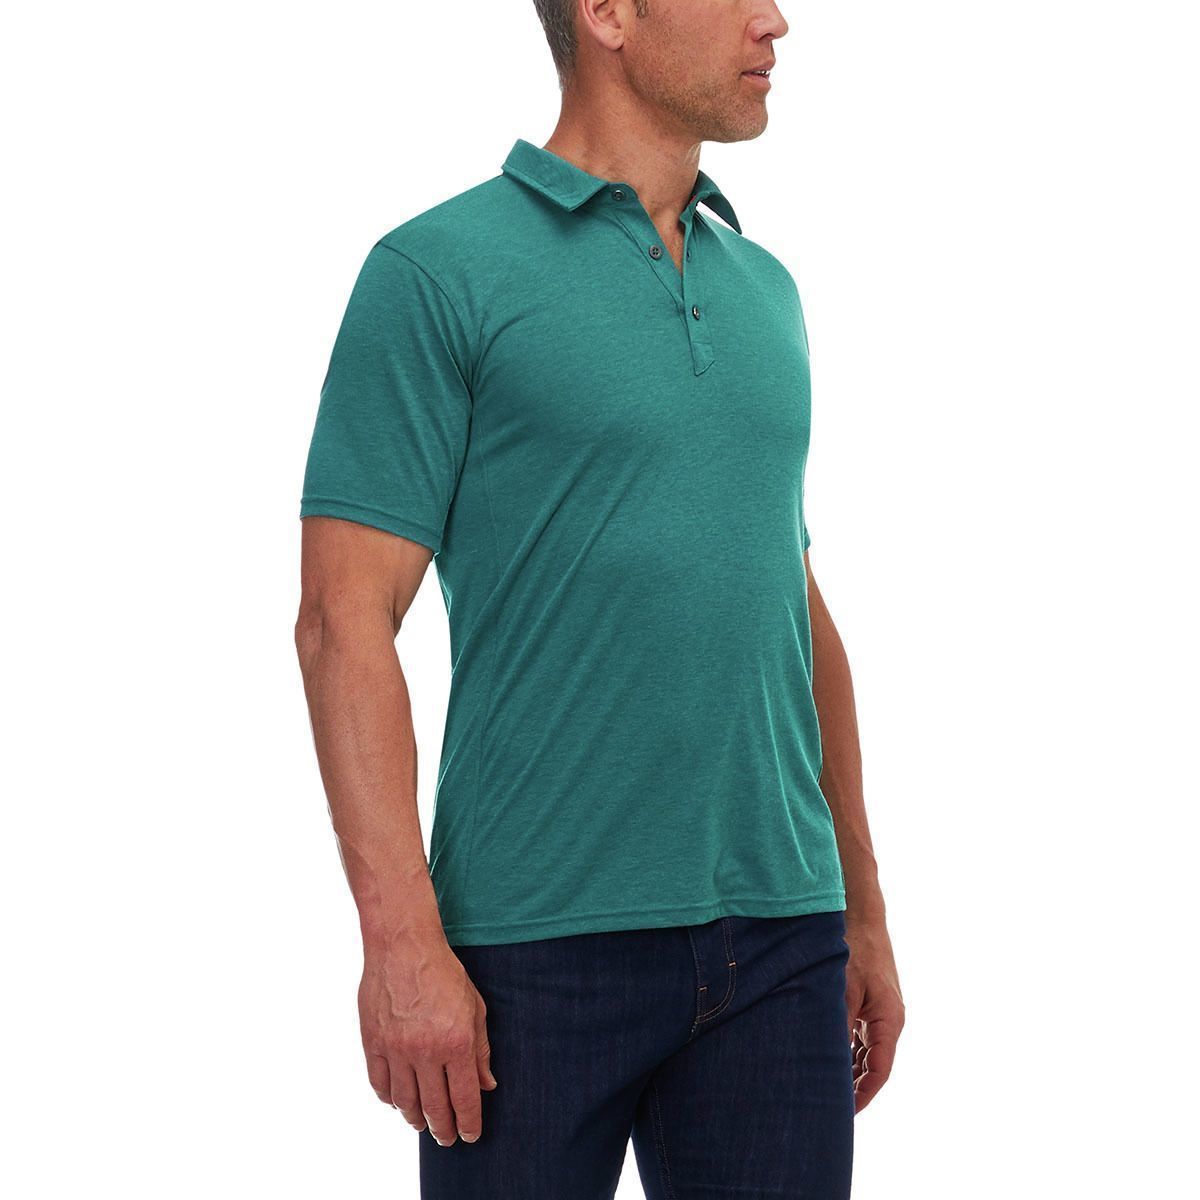 Basin and Range Meadows DriRelease Polo Shirt - Men's